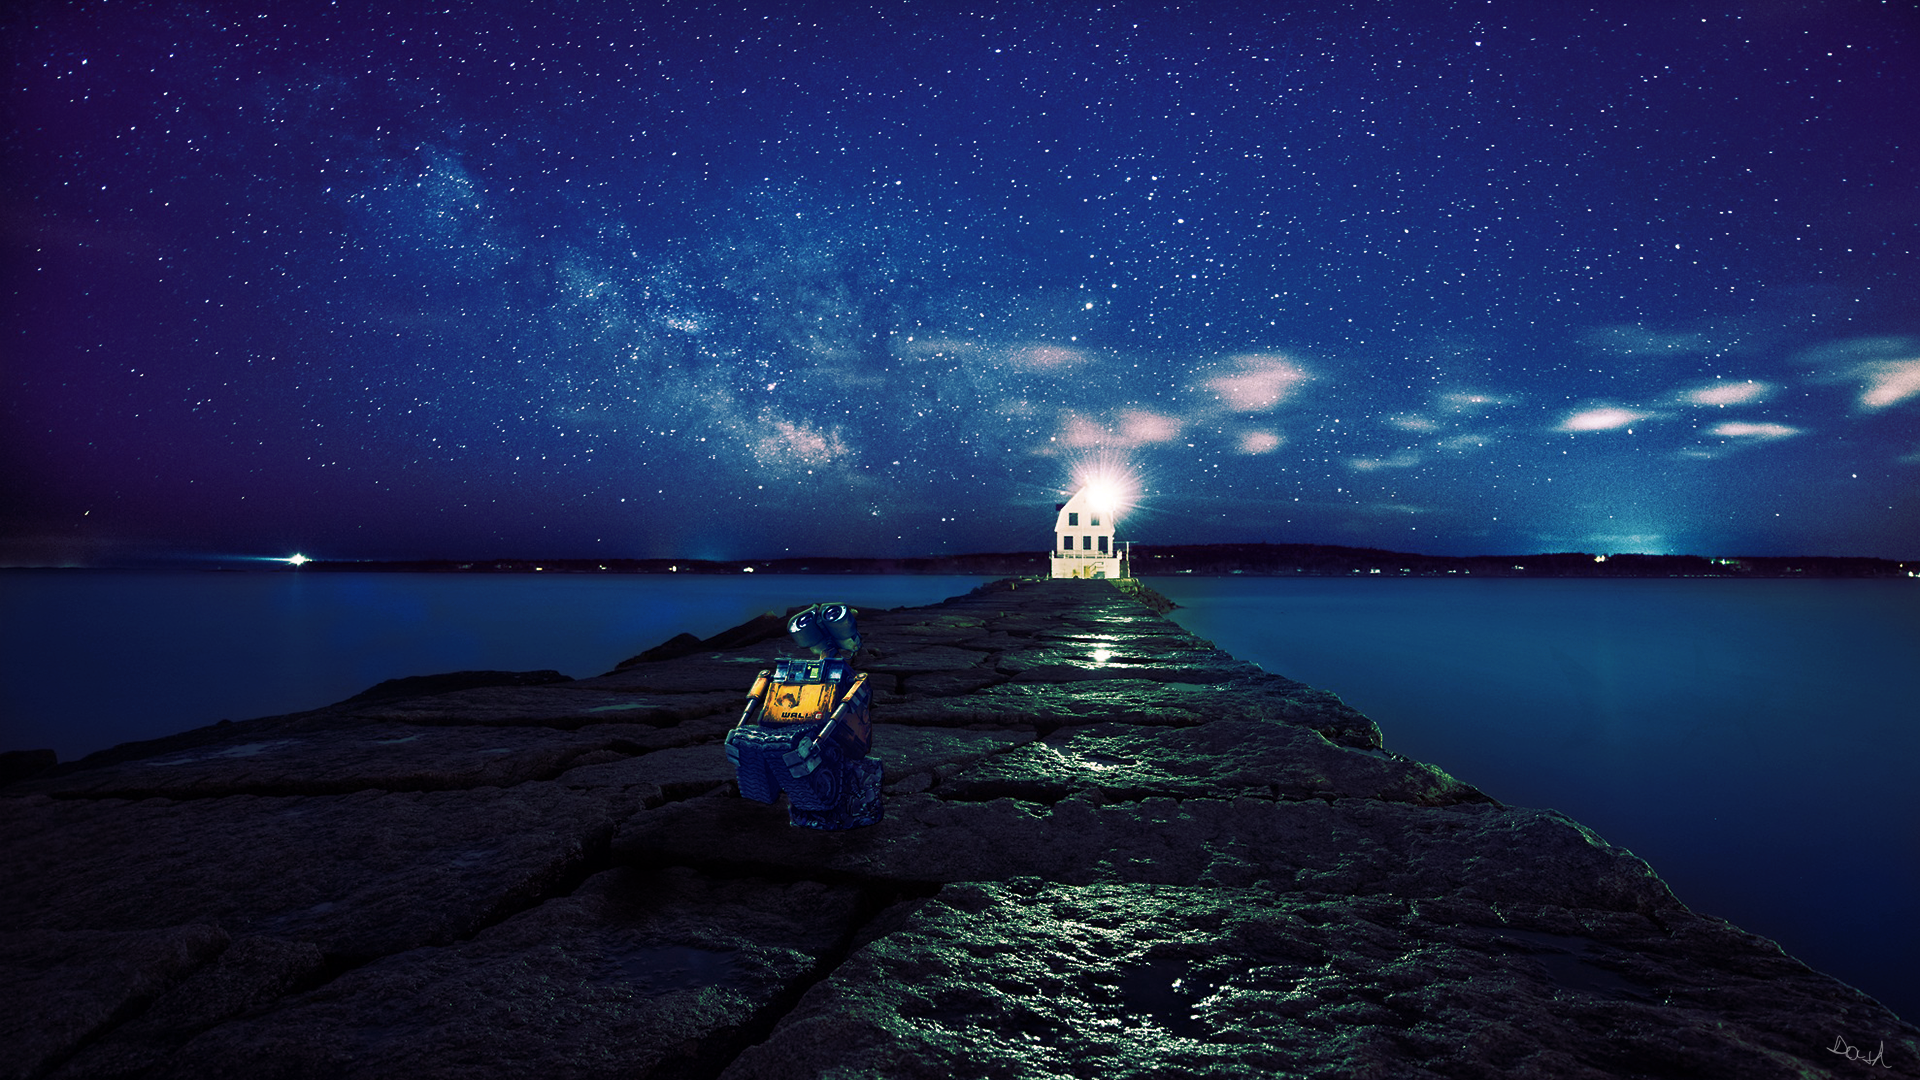 General 1920x1080 landscape star trails house water WALL-E blue pier stars starred sky night